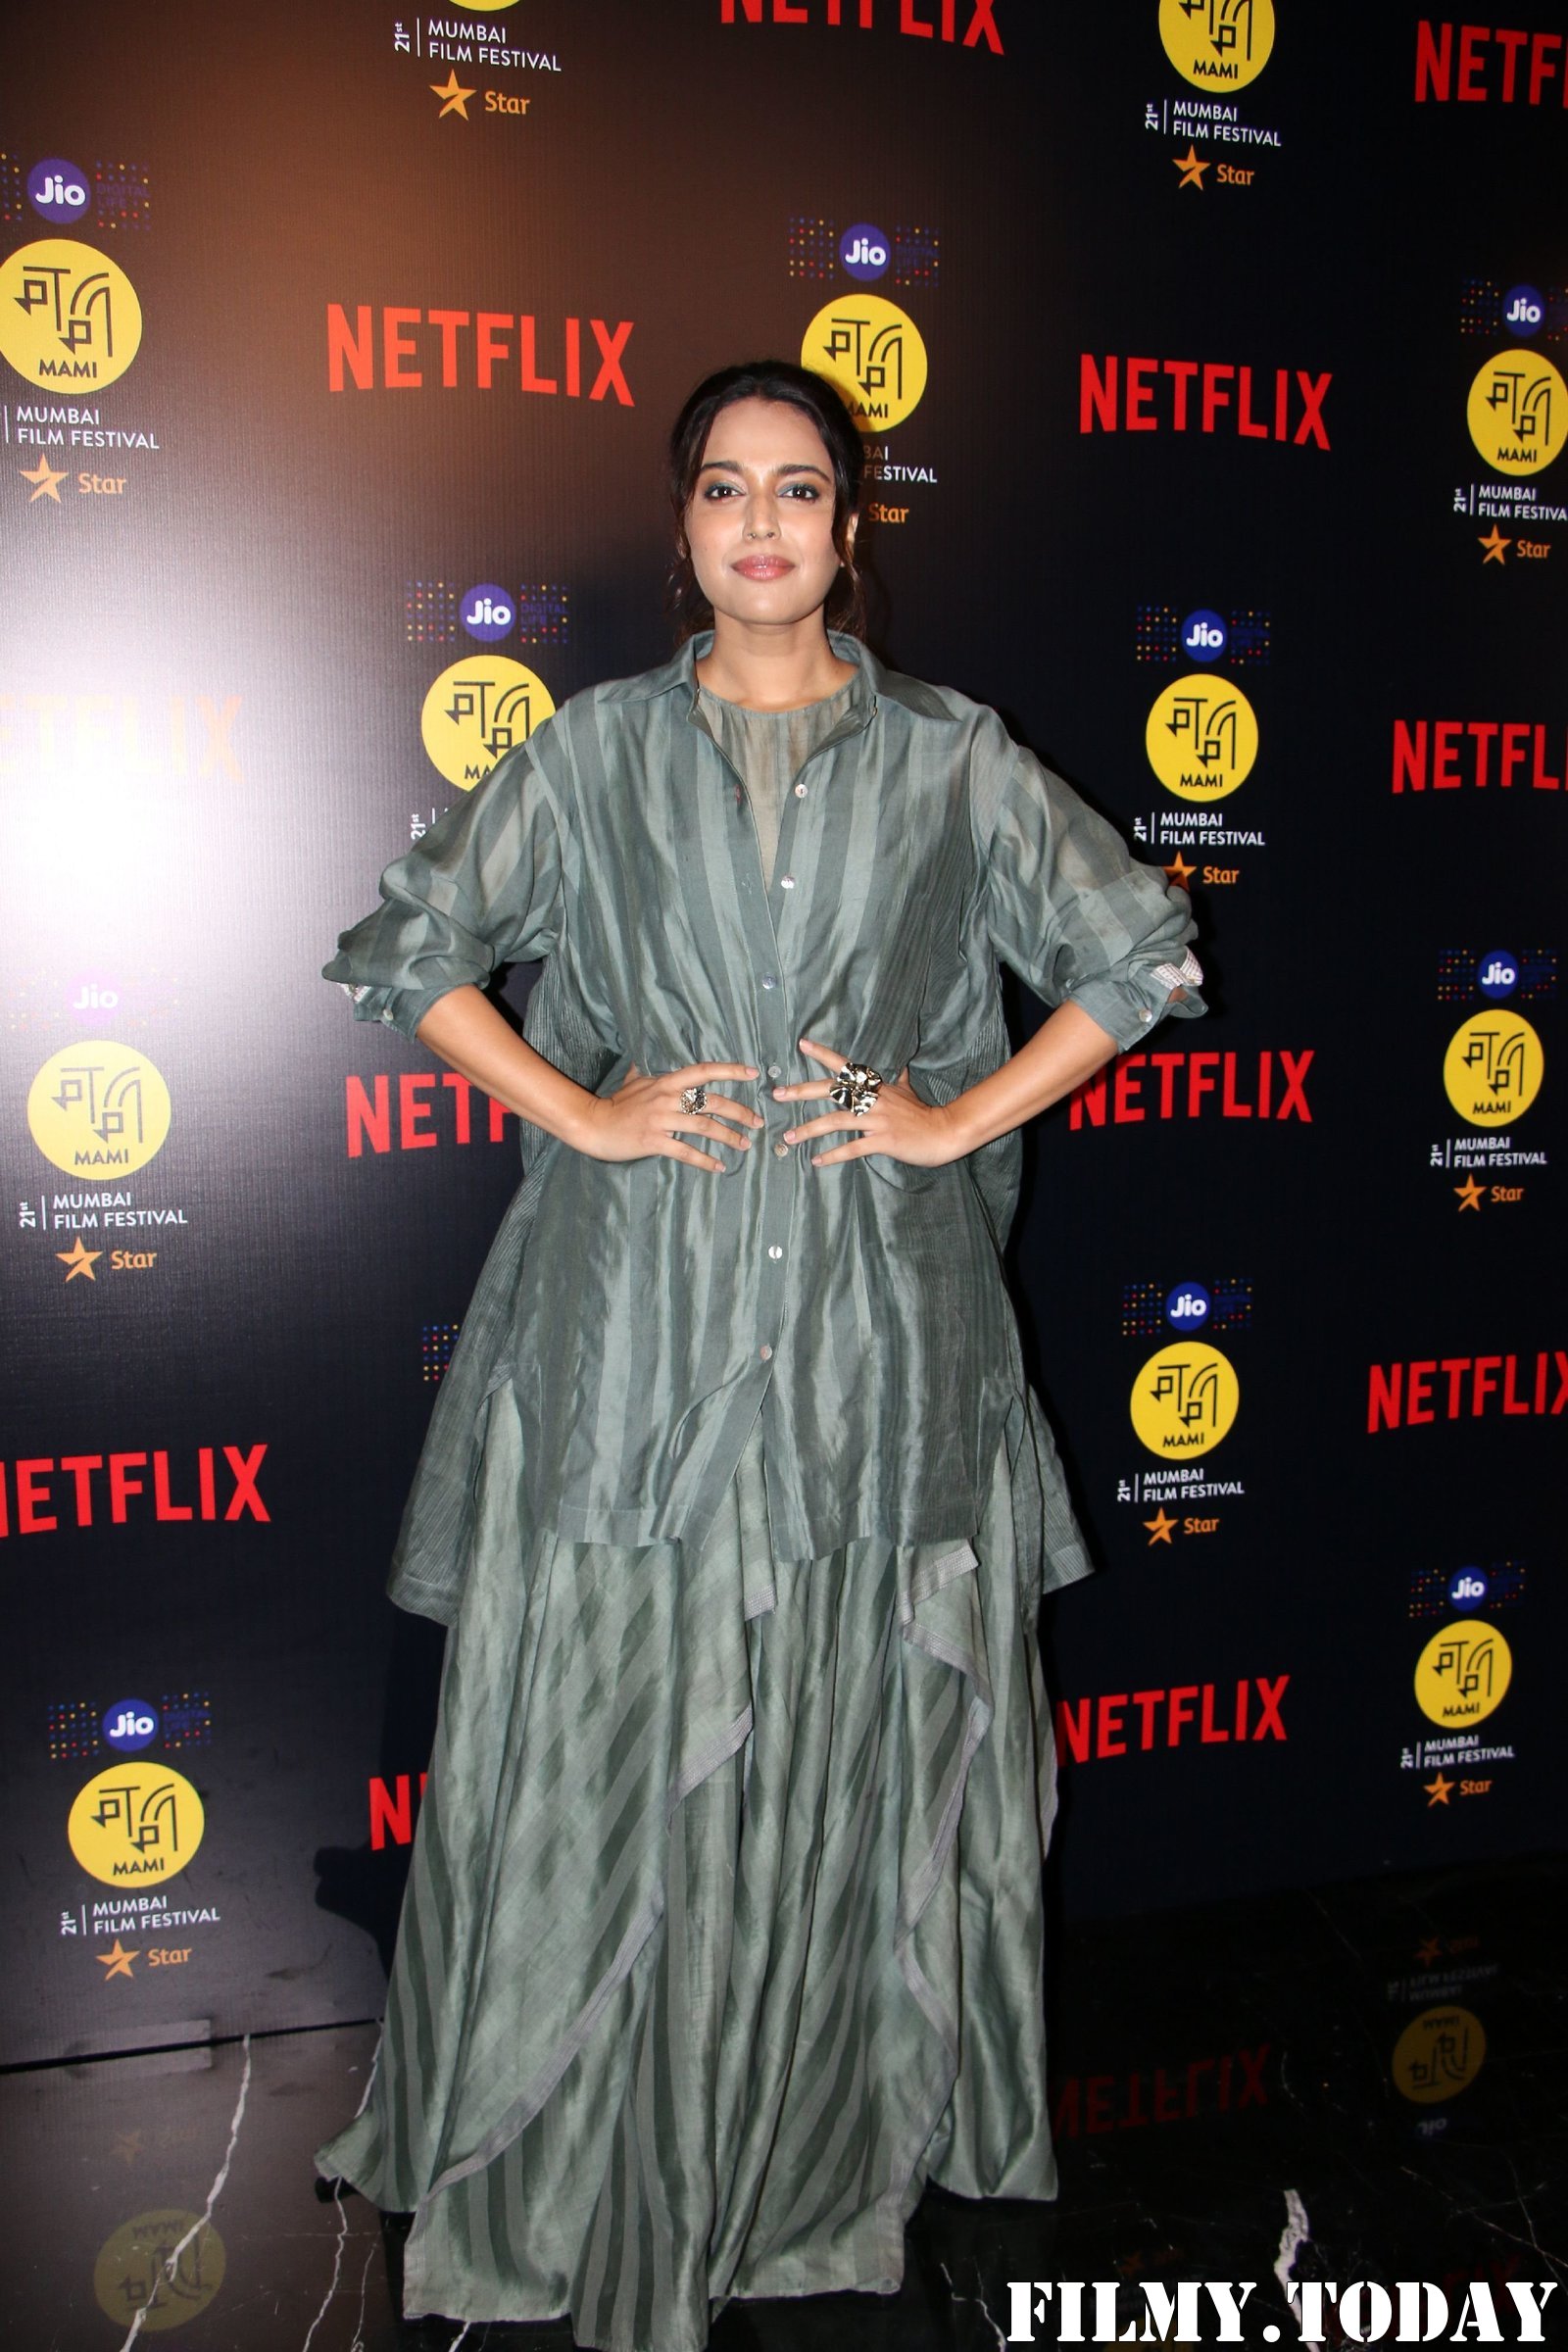 Swara Bhaskar - Photos: Women In Films Celebrations By Netflix At Mami Film Festival 2019 | Picture 1693377